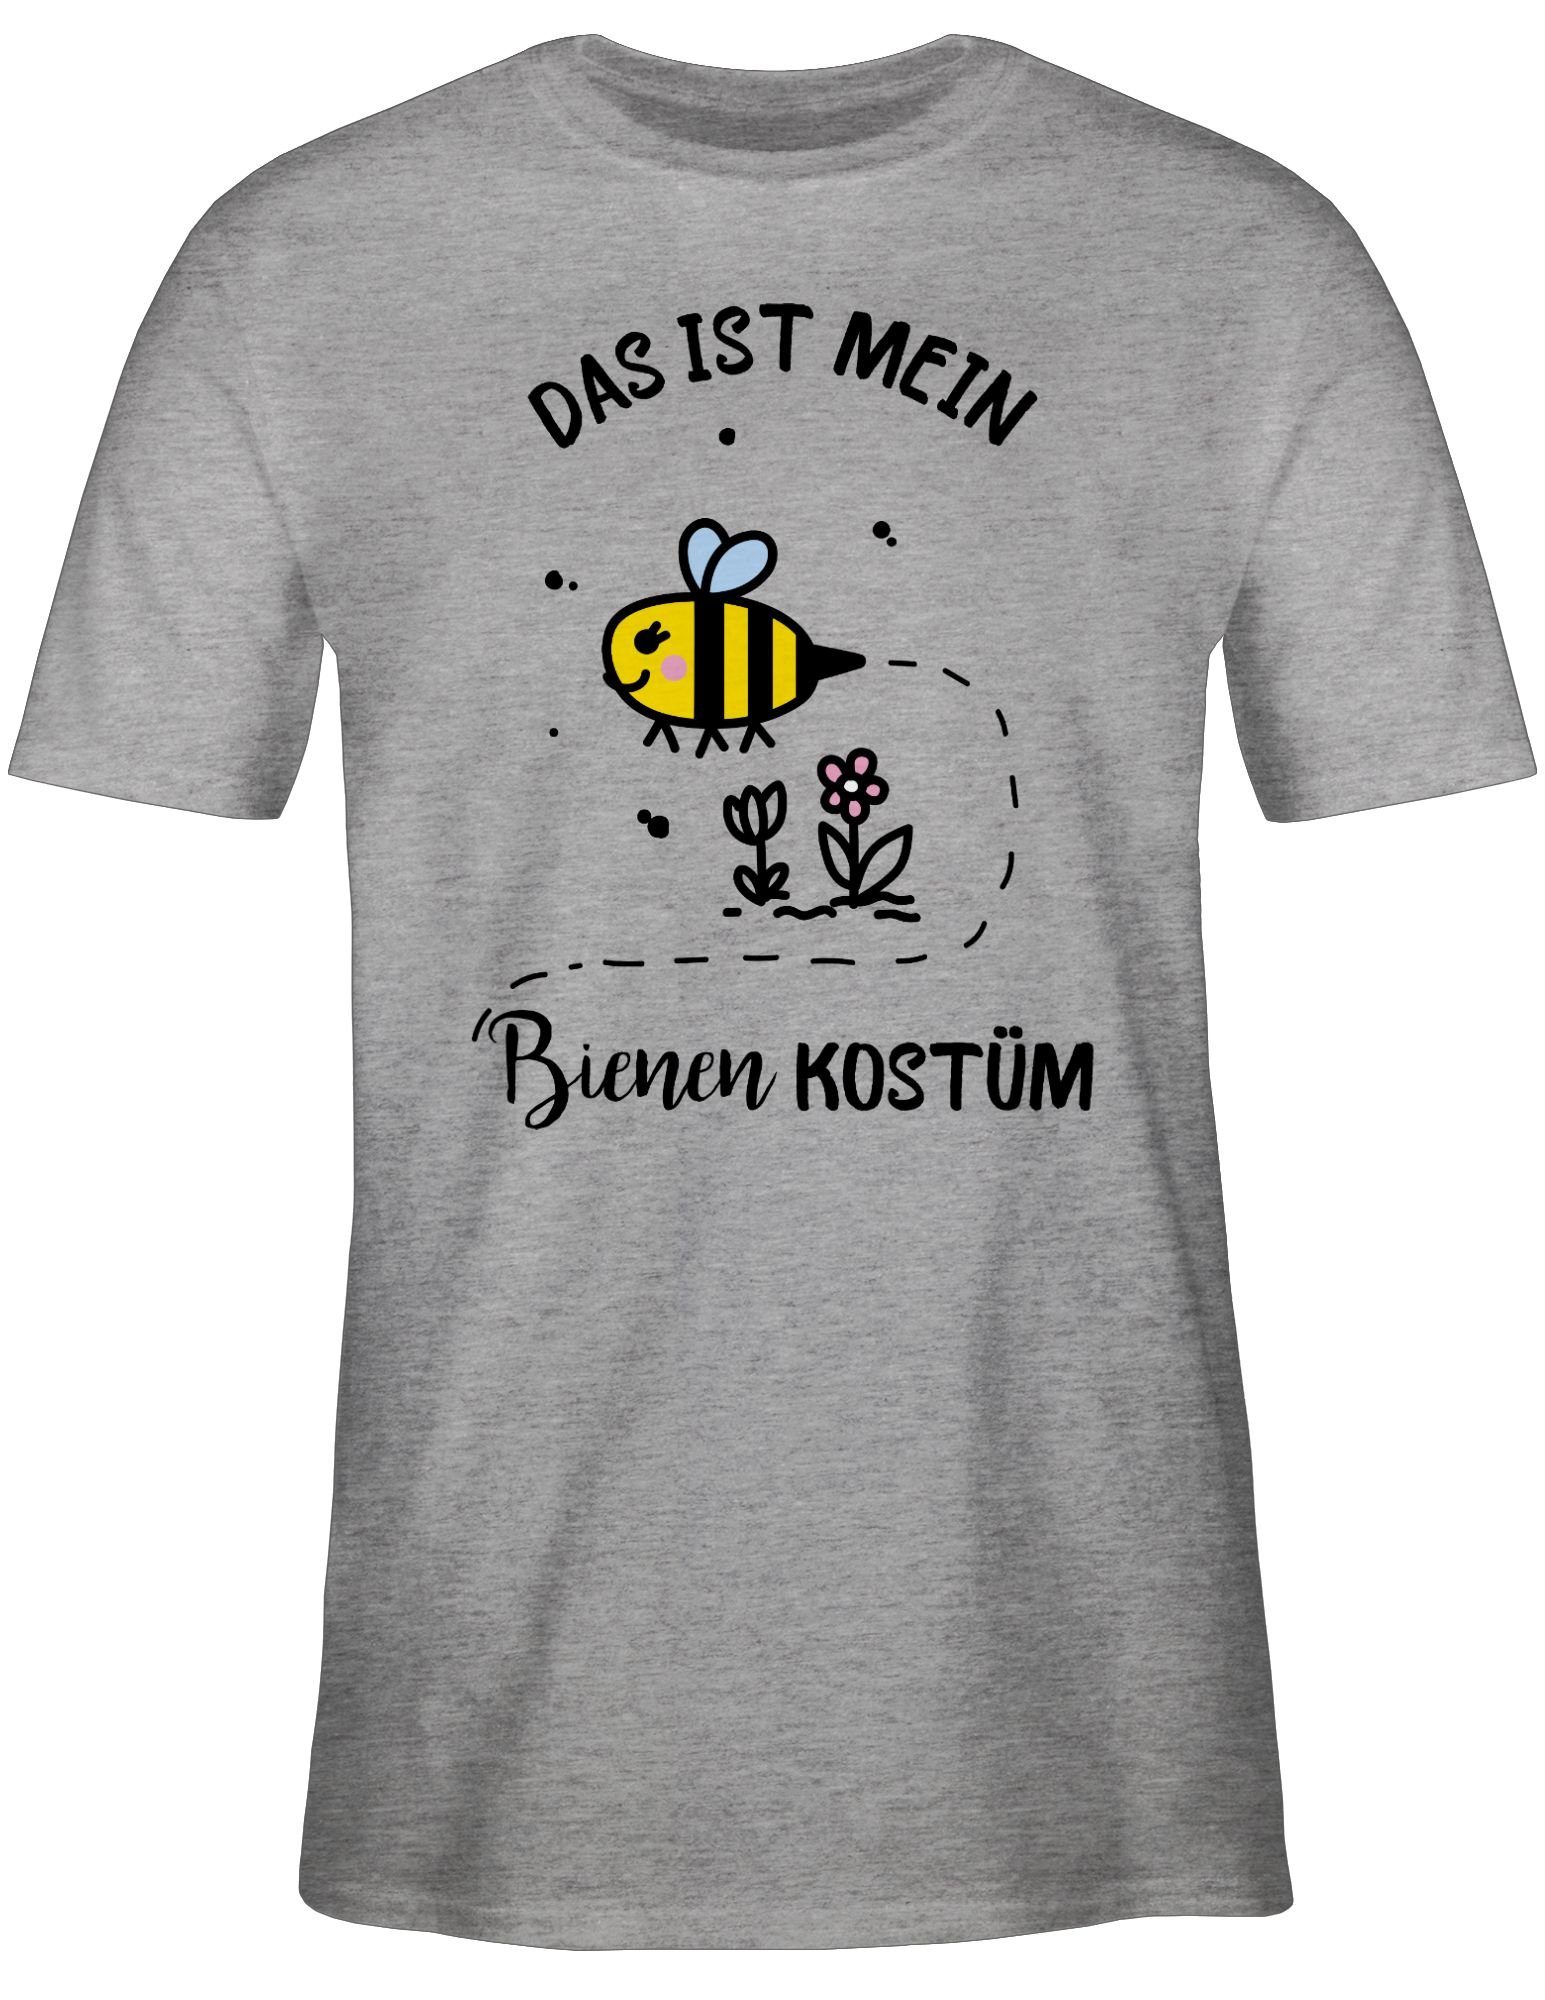 meliert ist Grau Das 3 Karneval mein T-Shirt Bienen Outfit Shirtracer Kostüm